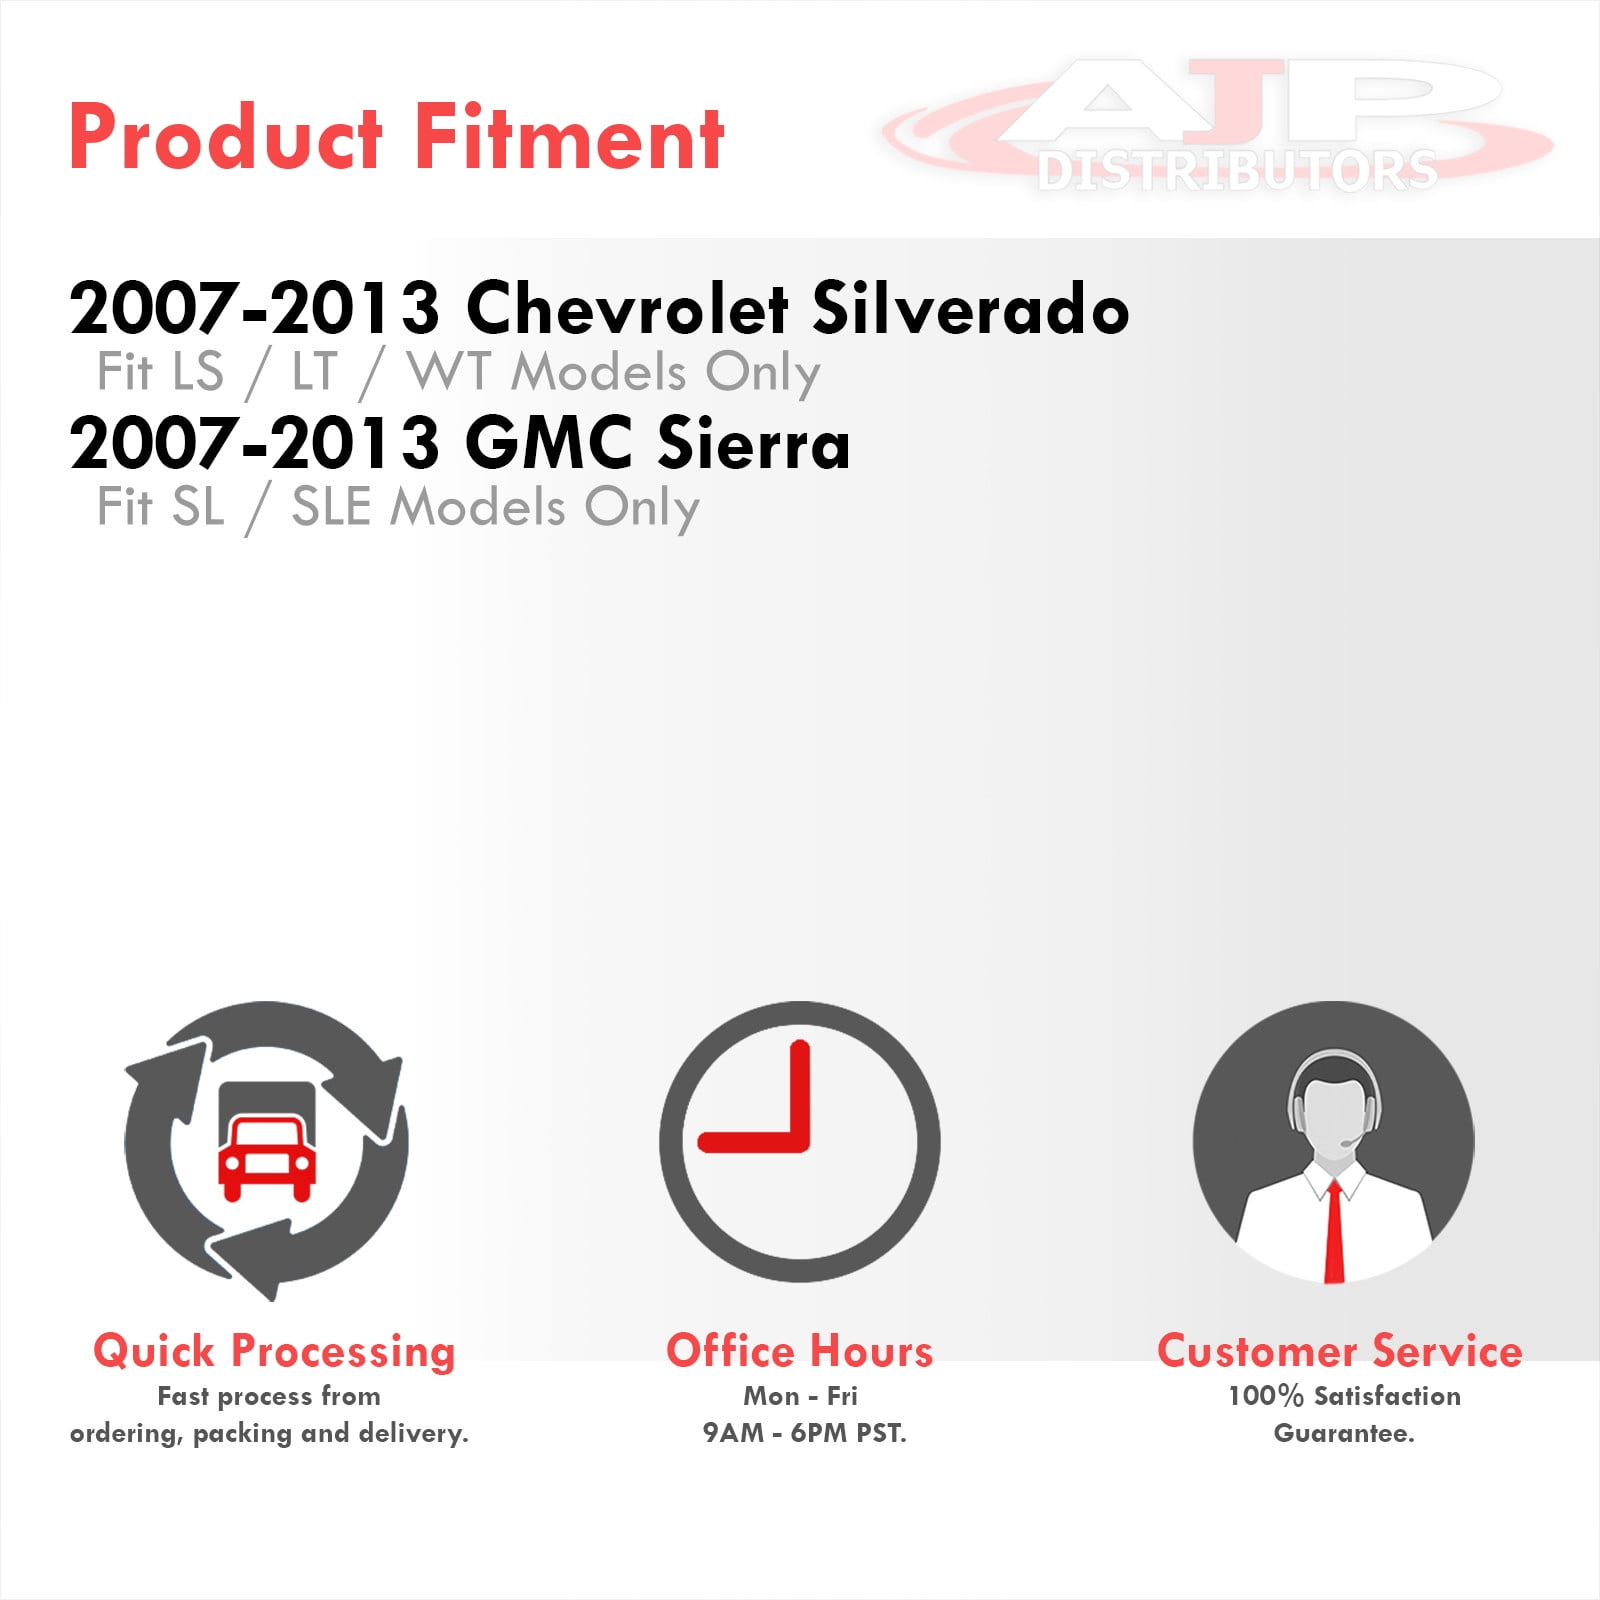 2PCS Black Front Dash Board Cap Cover Bezel Overlay for 07-13 Silverado/Sierra  Fits select: 2007-2013 CHEVROLET SILVERADO, 2007-2013 GMC SIERRA 